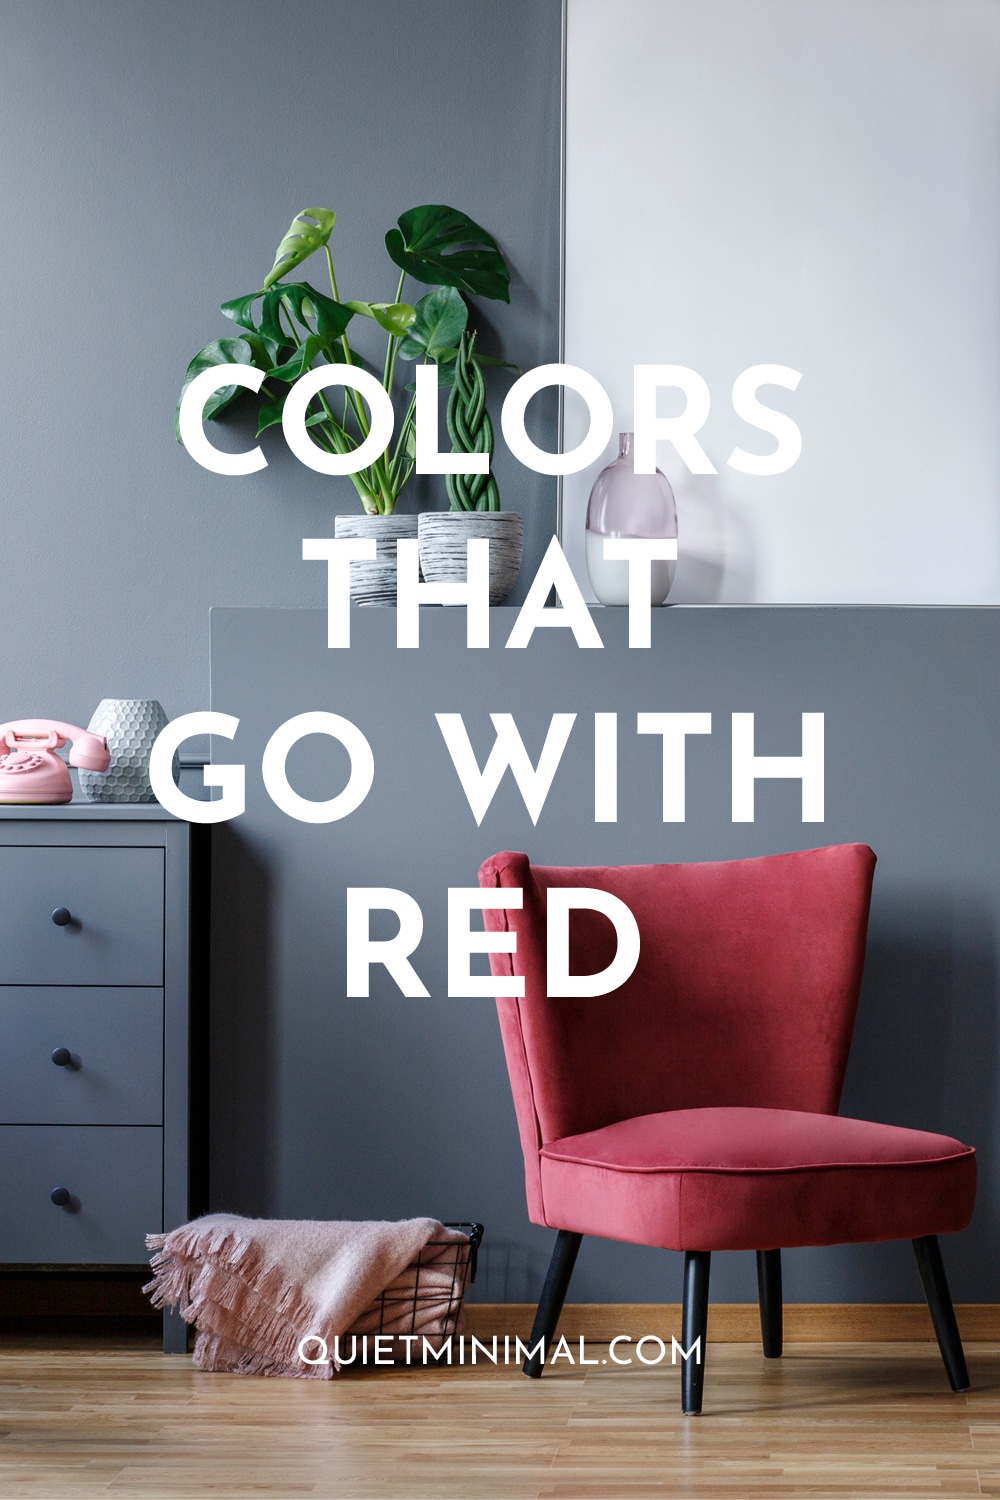 Colors That Go With Red - Quiet Minimal - Interior Design Inspiration ...